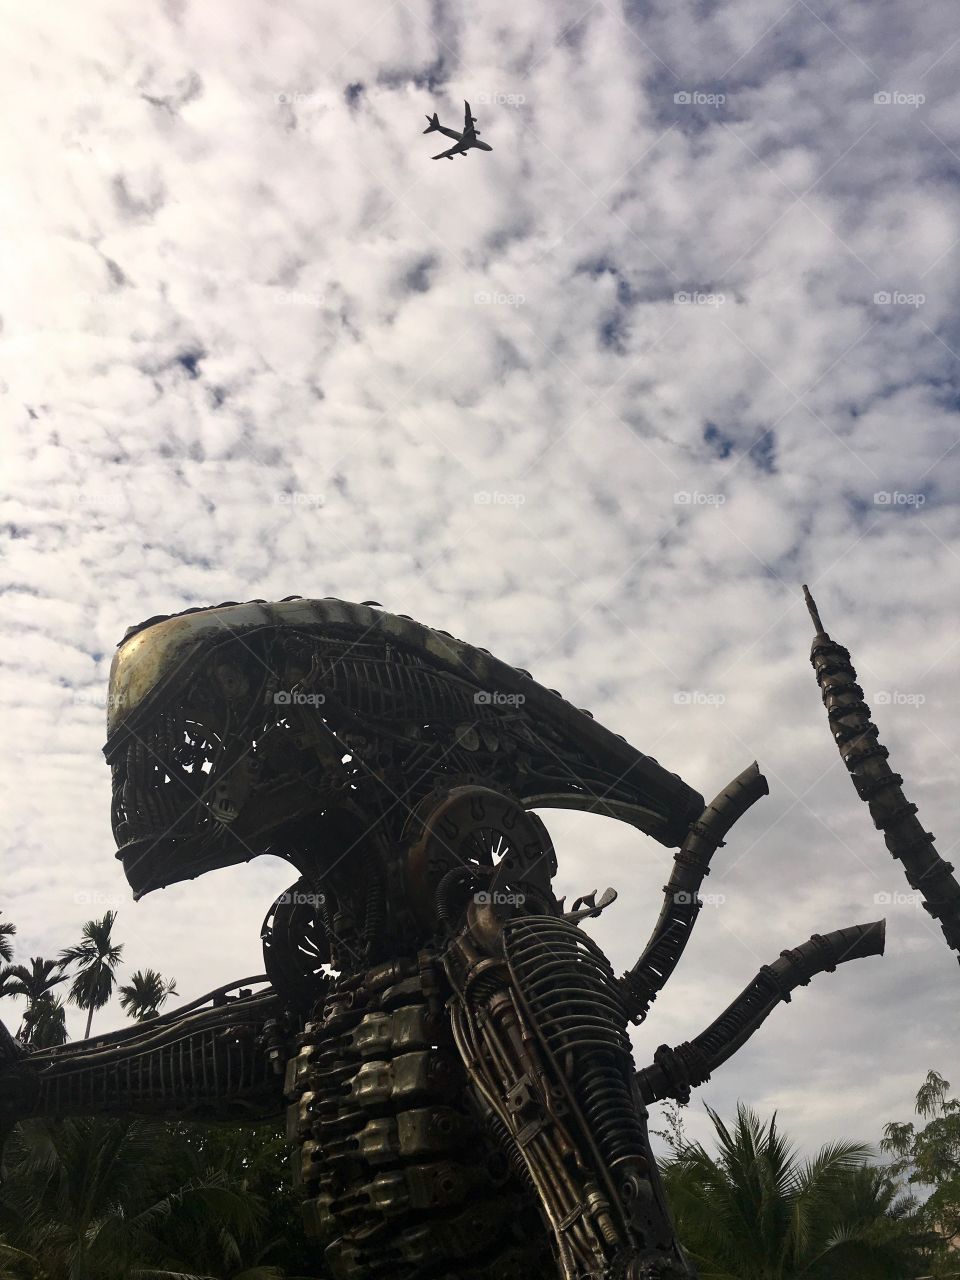 Alien action figure 